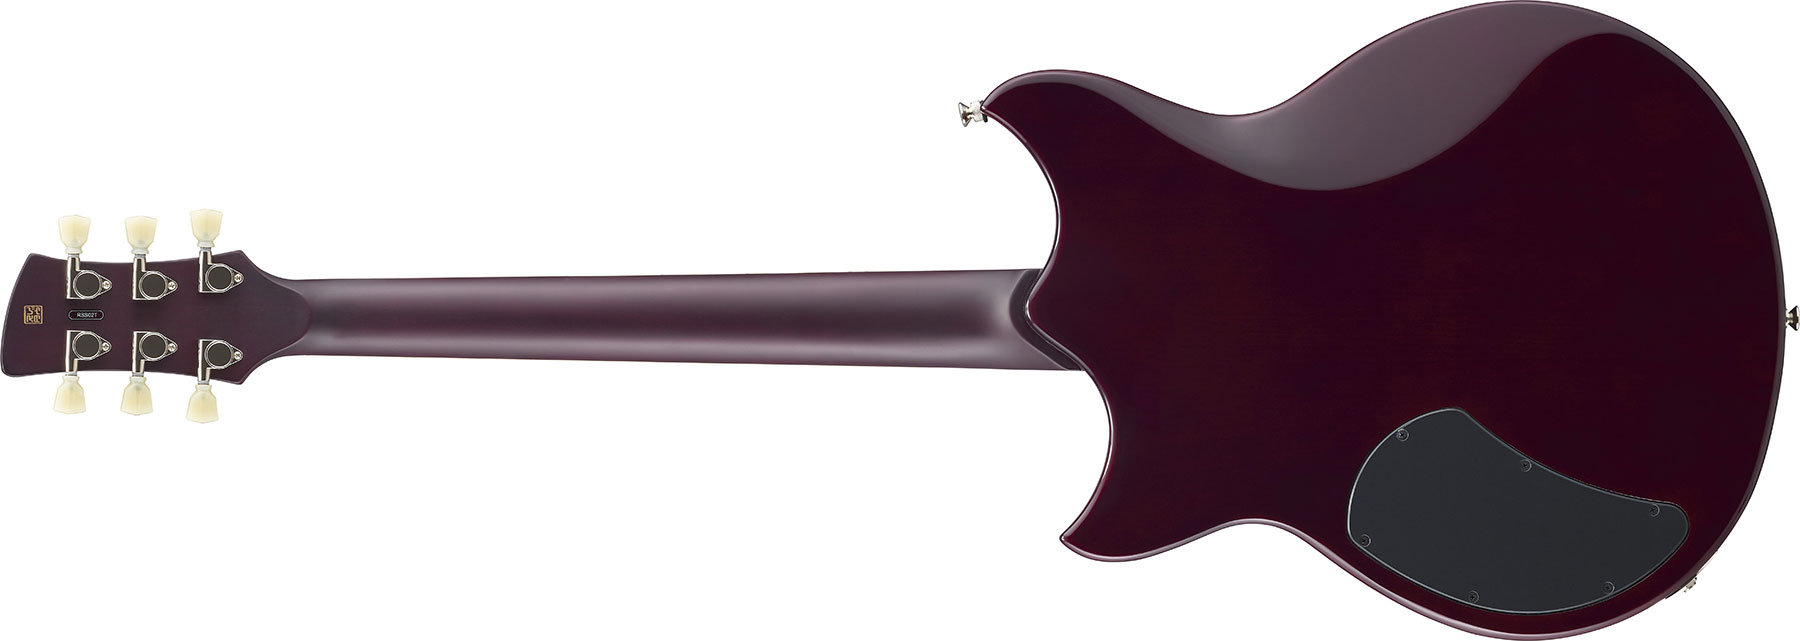 Yamaha Rss02t Revstar Standard 2p90 Ht Rw - Hot Merlot - Double Cut E-Gitarre - Variation 2